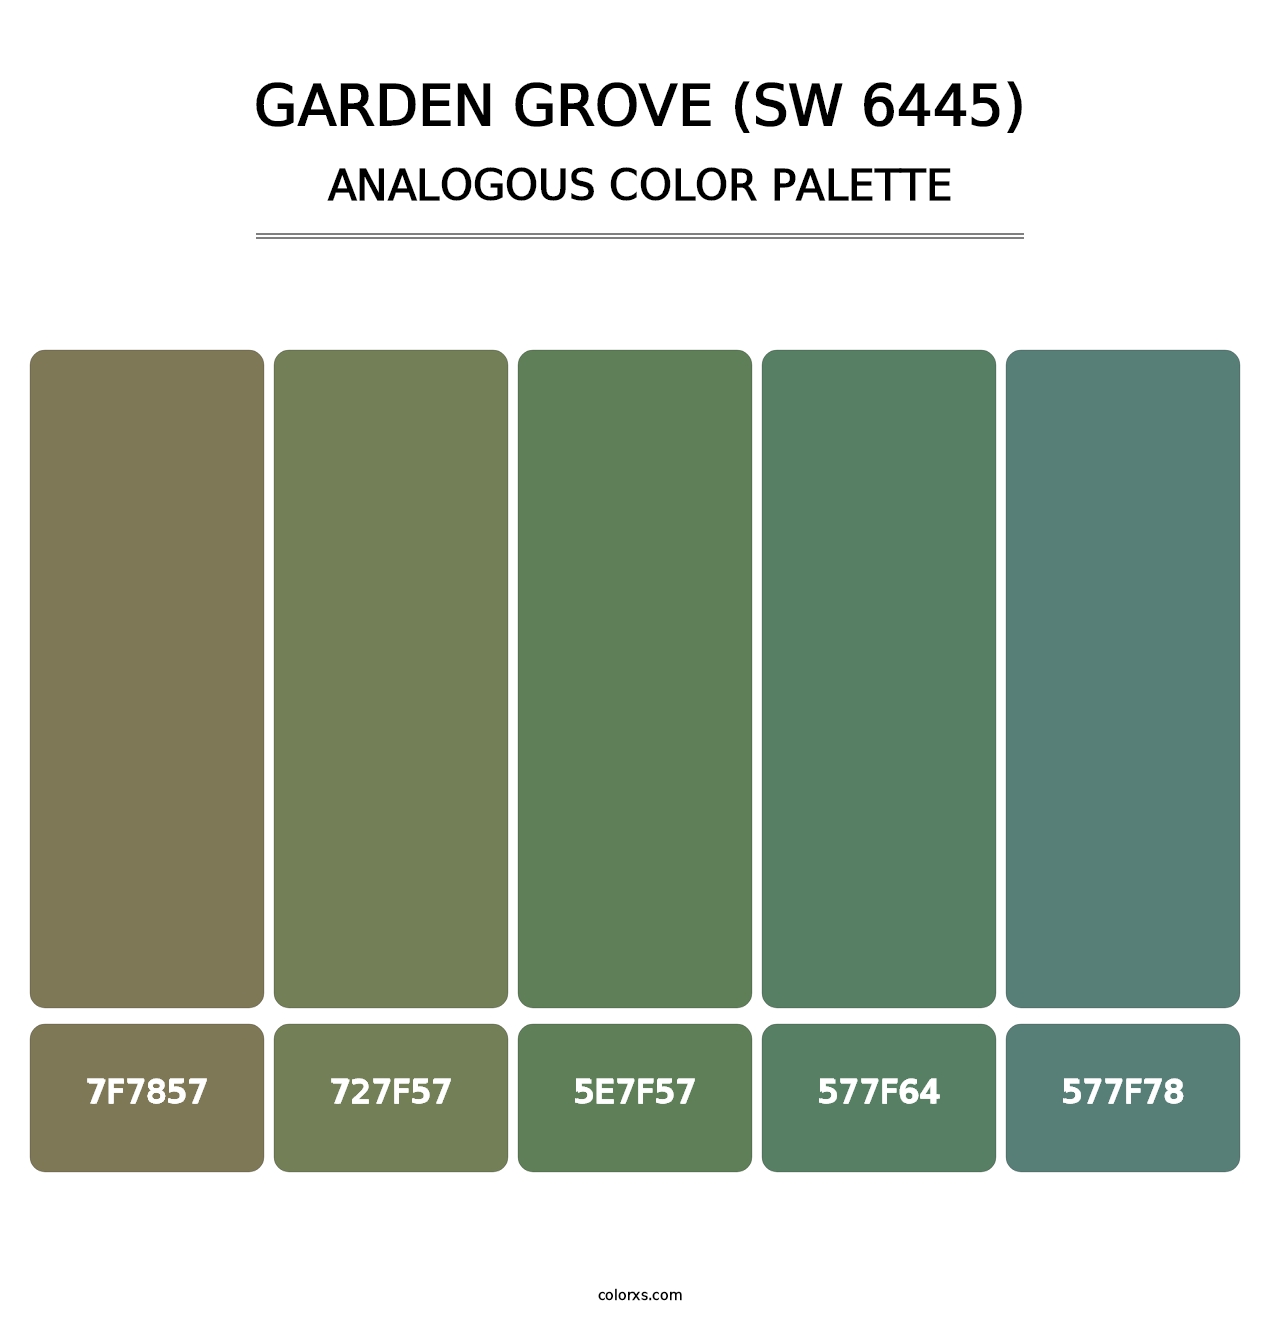 Garden Grove (SW 6445) - Analogous Color Palette